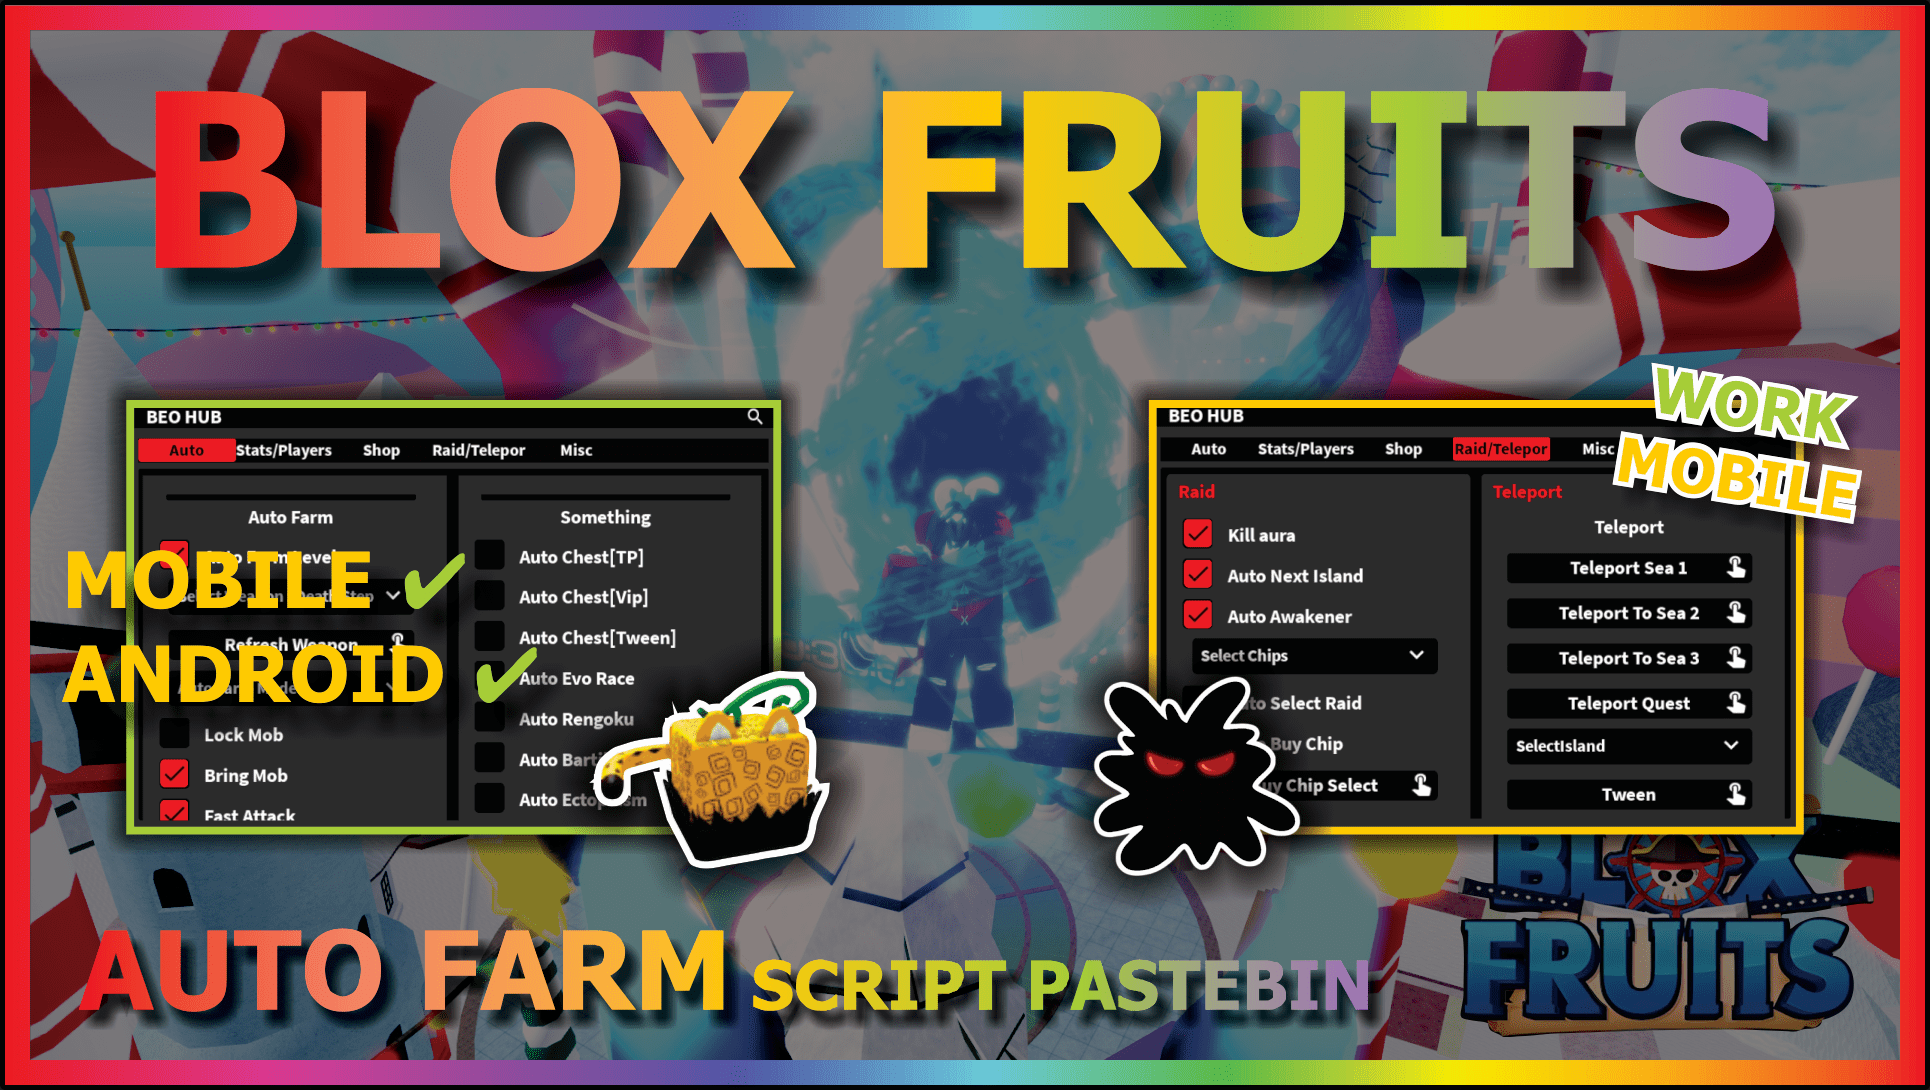 FTS X Hub Blox Fruits Script